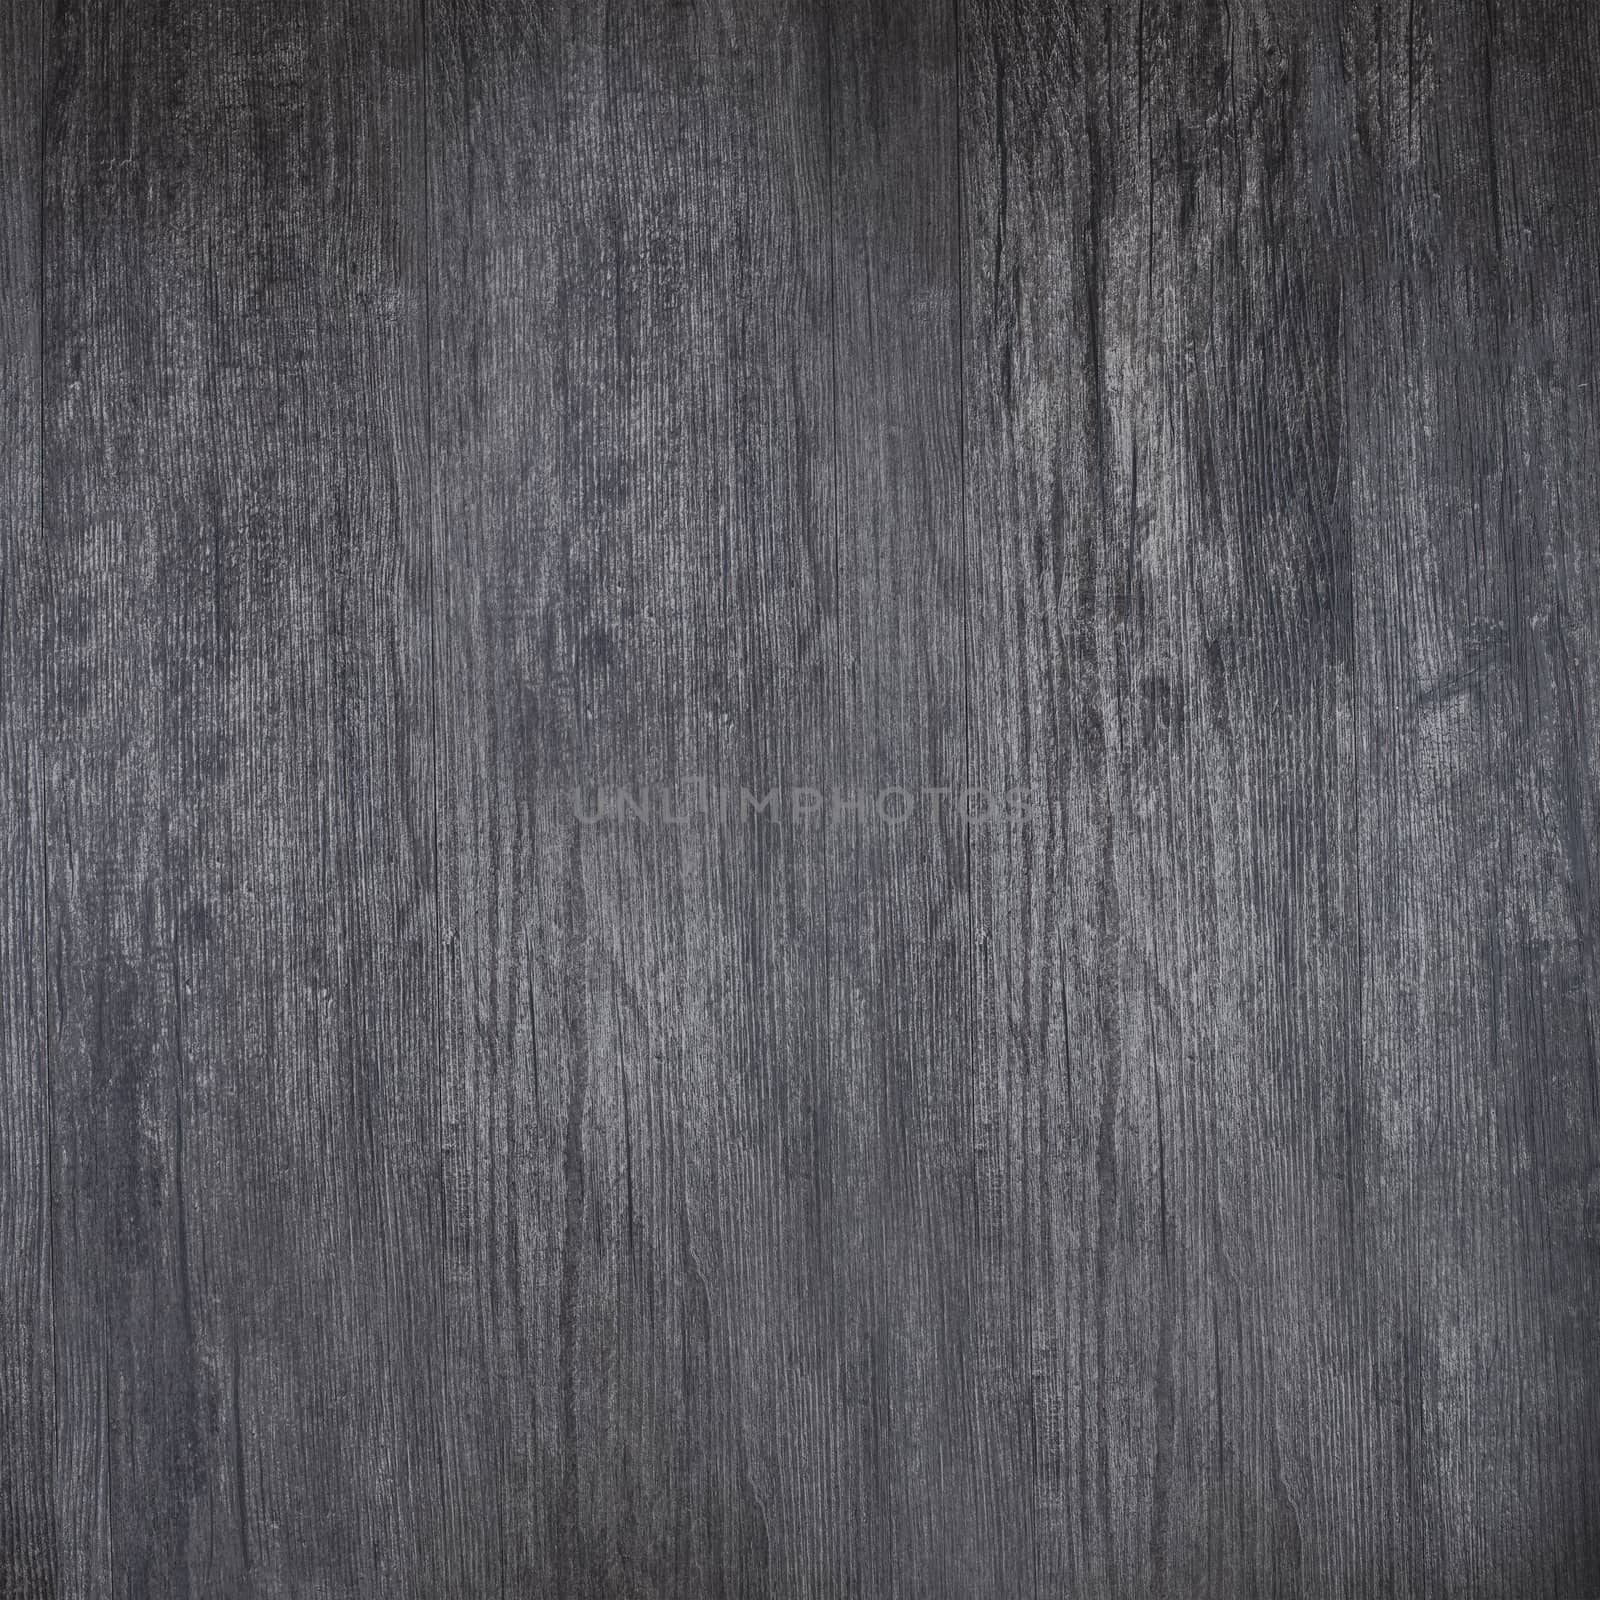 Wallpaper imitation wood with dark gray background Wallpaper